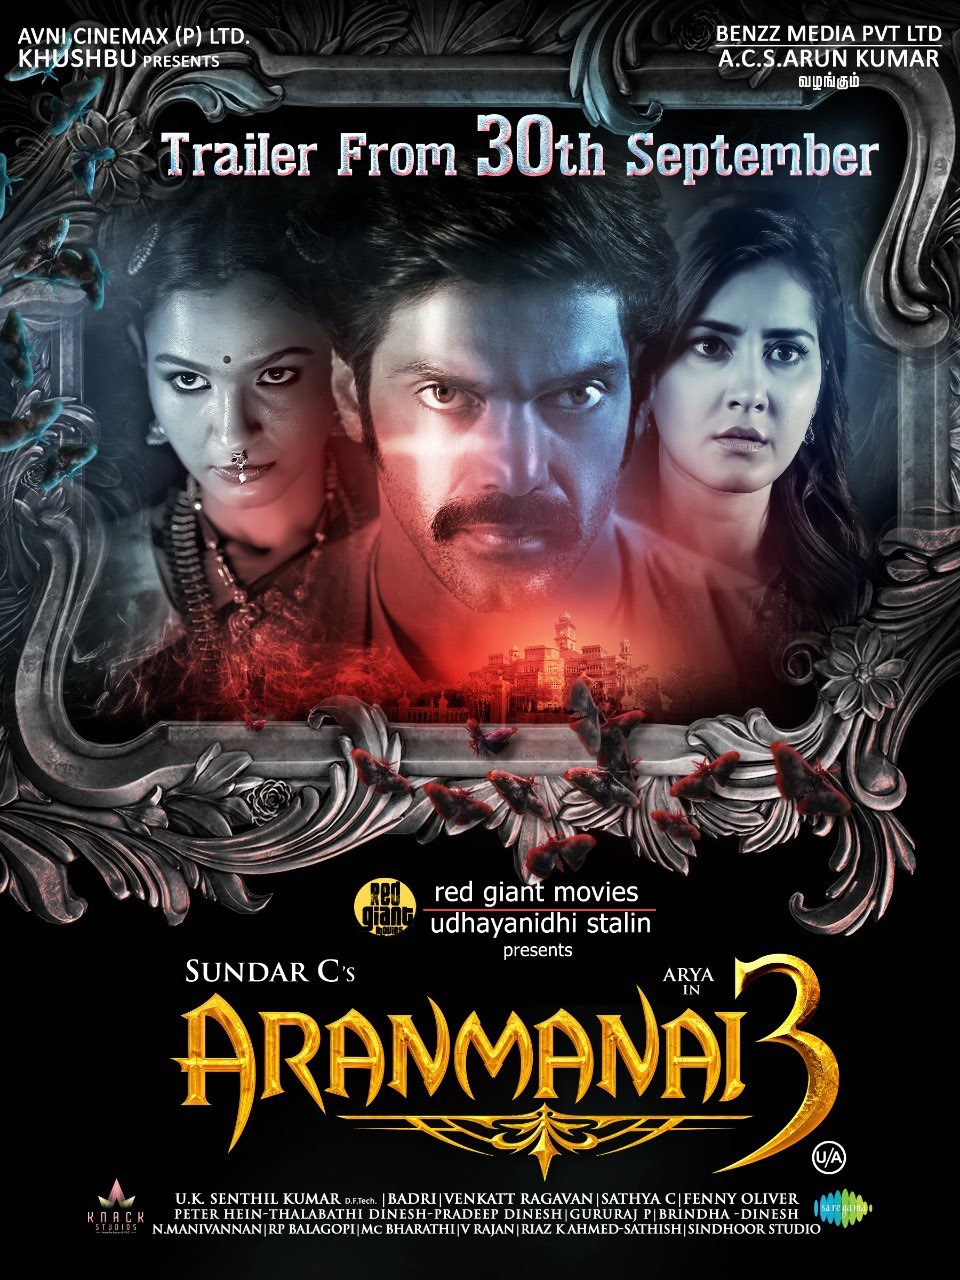 arya sundar c aranmanai 3 trailer release date announced